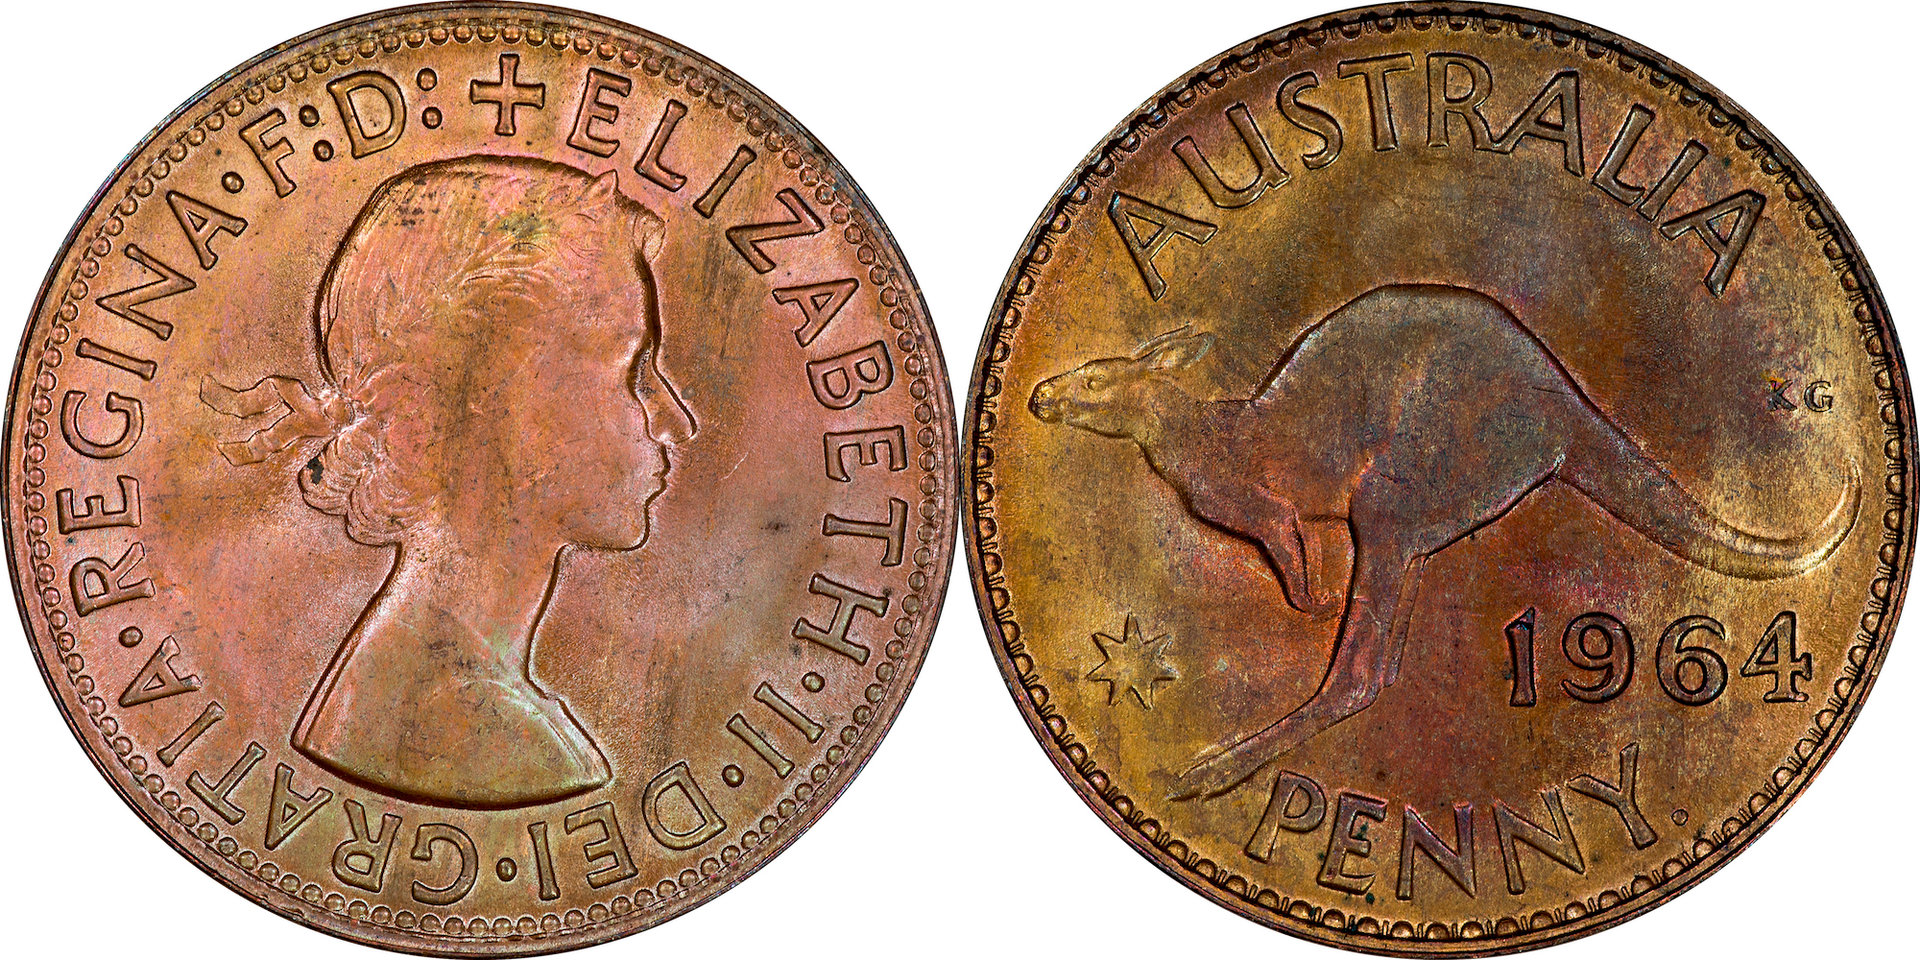 Australia - 1964 1 Penny.jpg